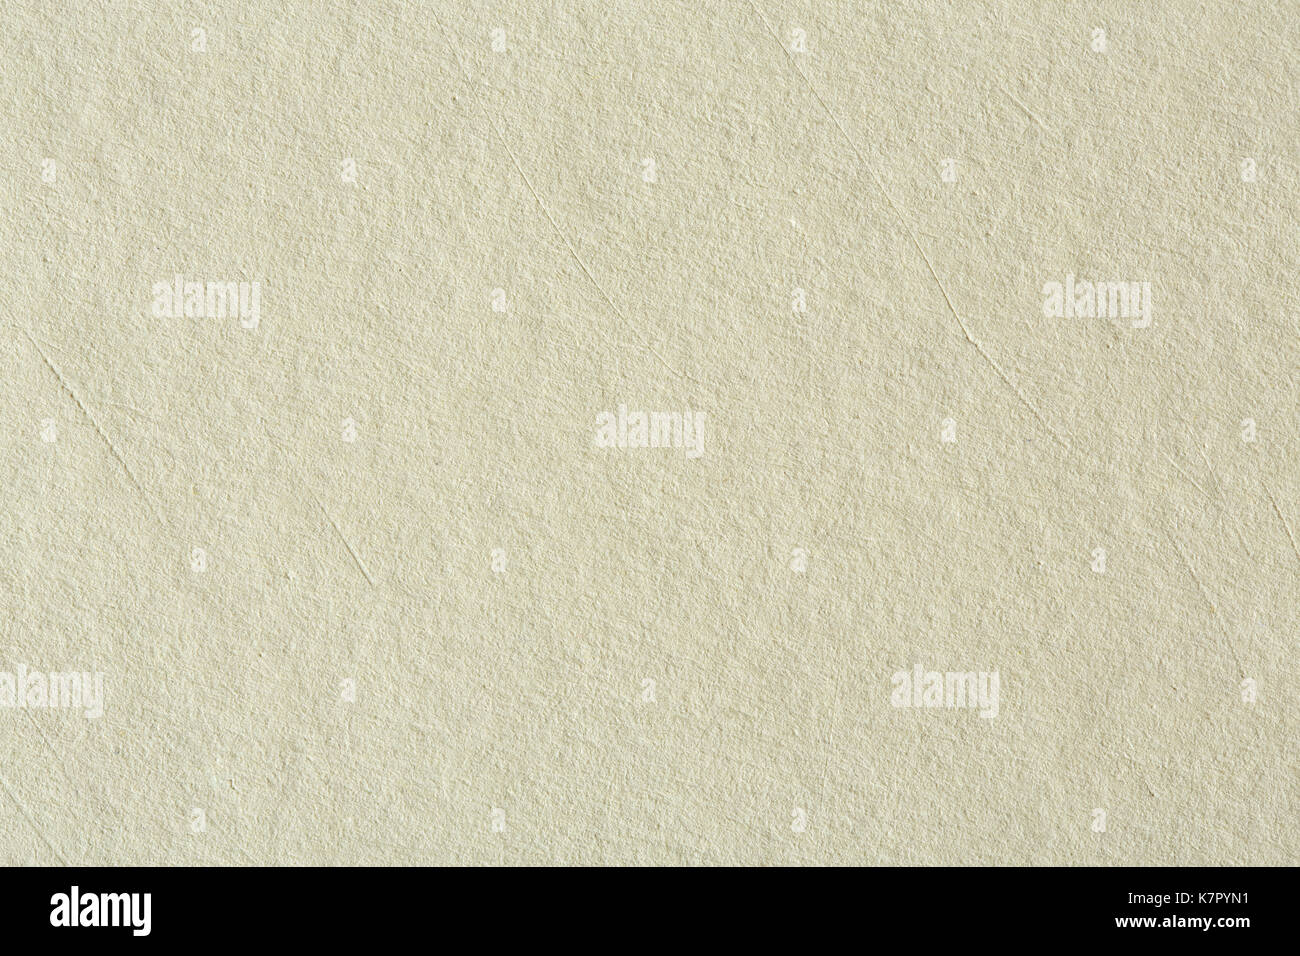 Recyclingpapier Textur Hintergrund in hellem Creme Sepia Farbton. Hochauflösende Fotos. Stockfoto